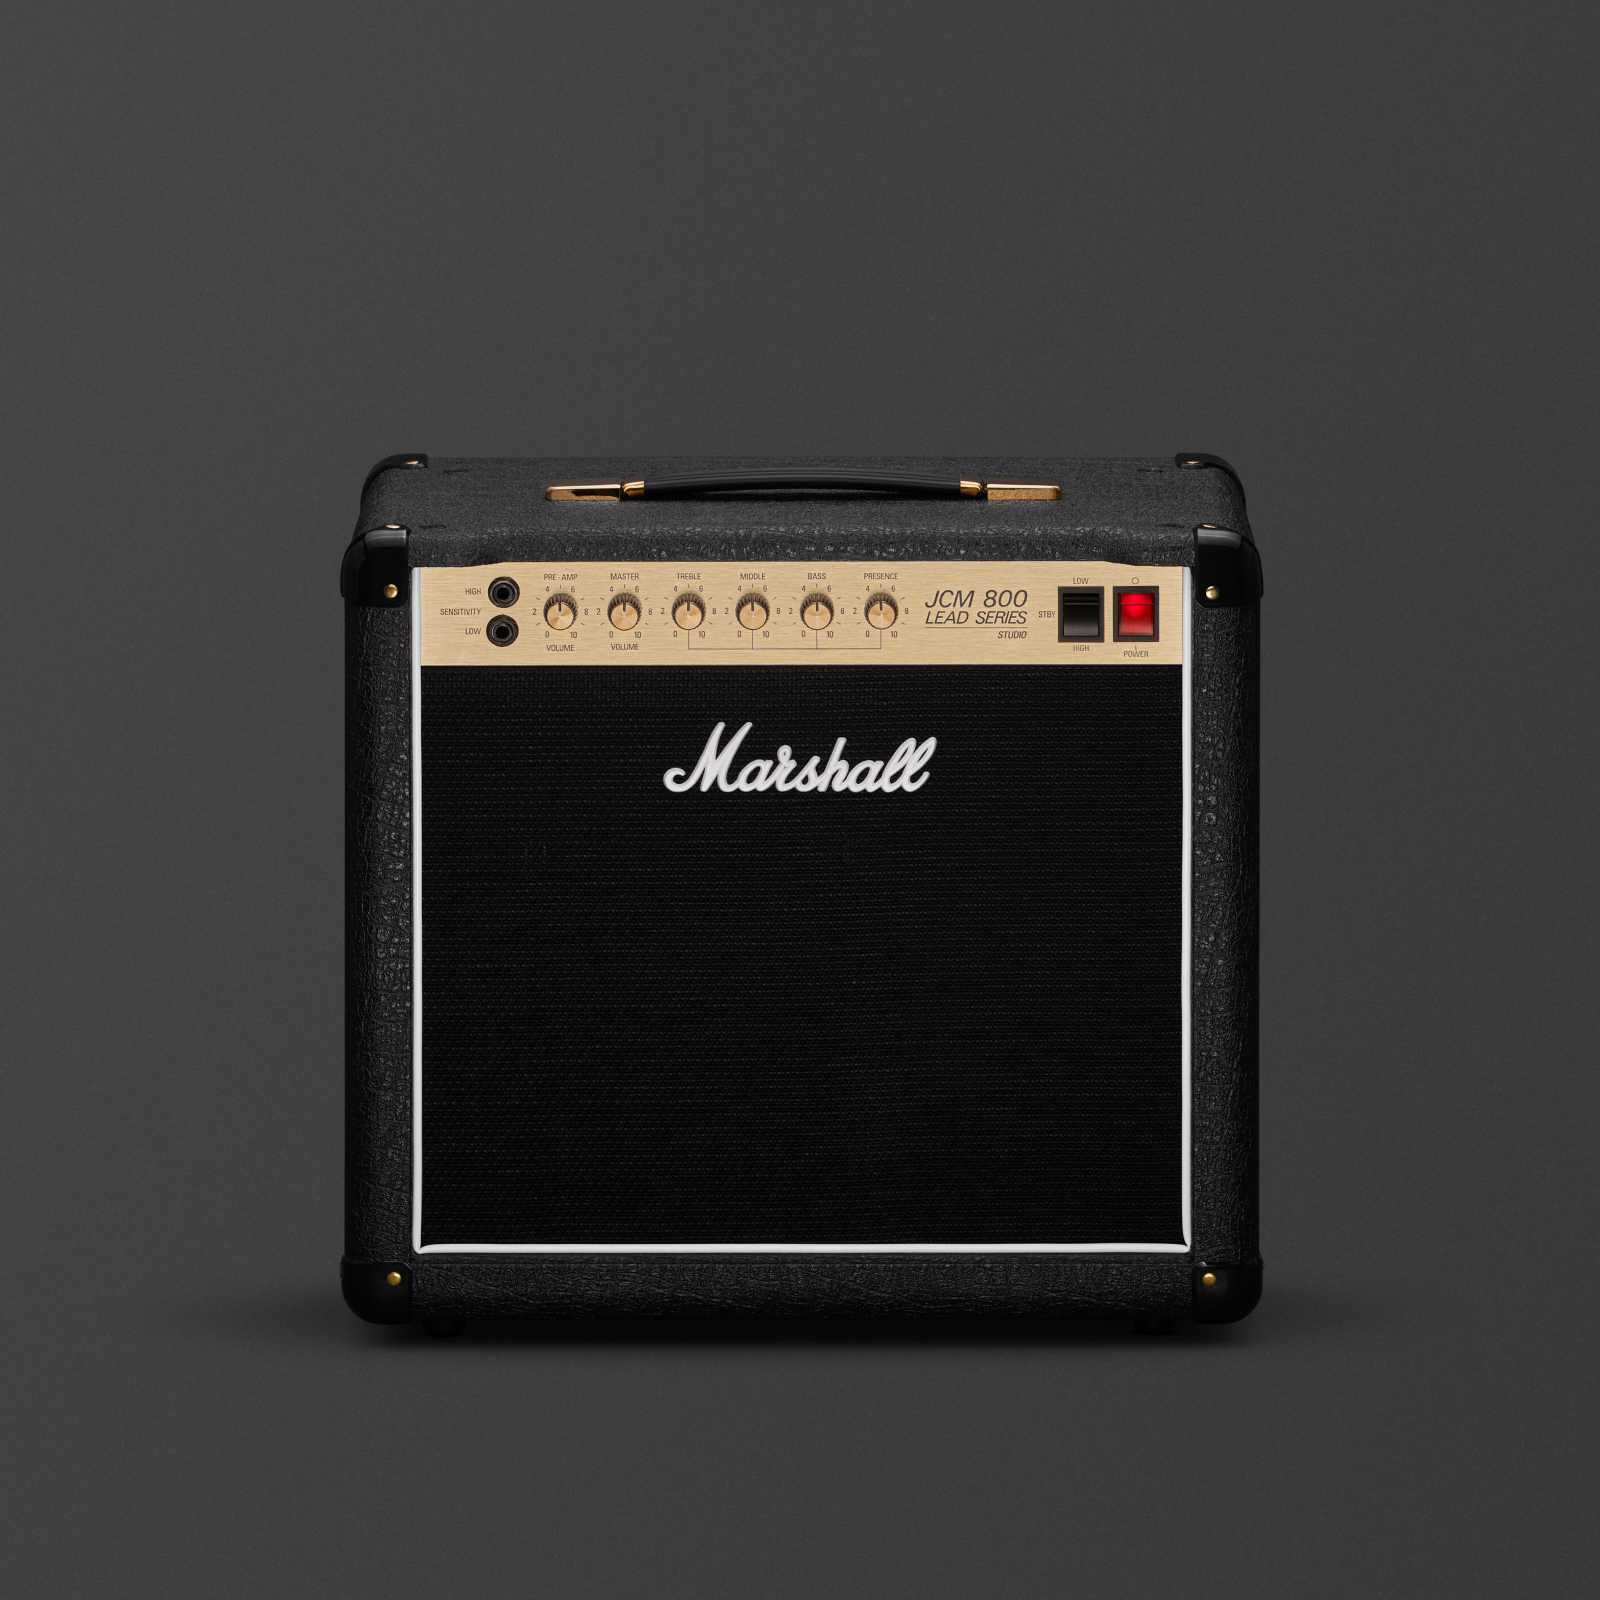 Studio Classic Combo 20W amplifier offering iconic JCM800 tones |  Marshall.com